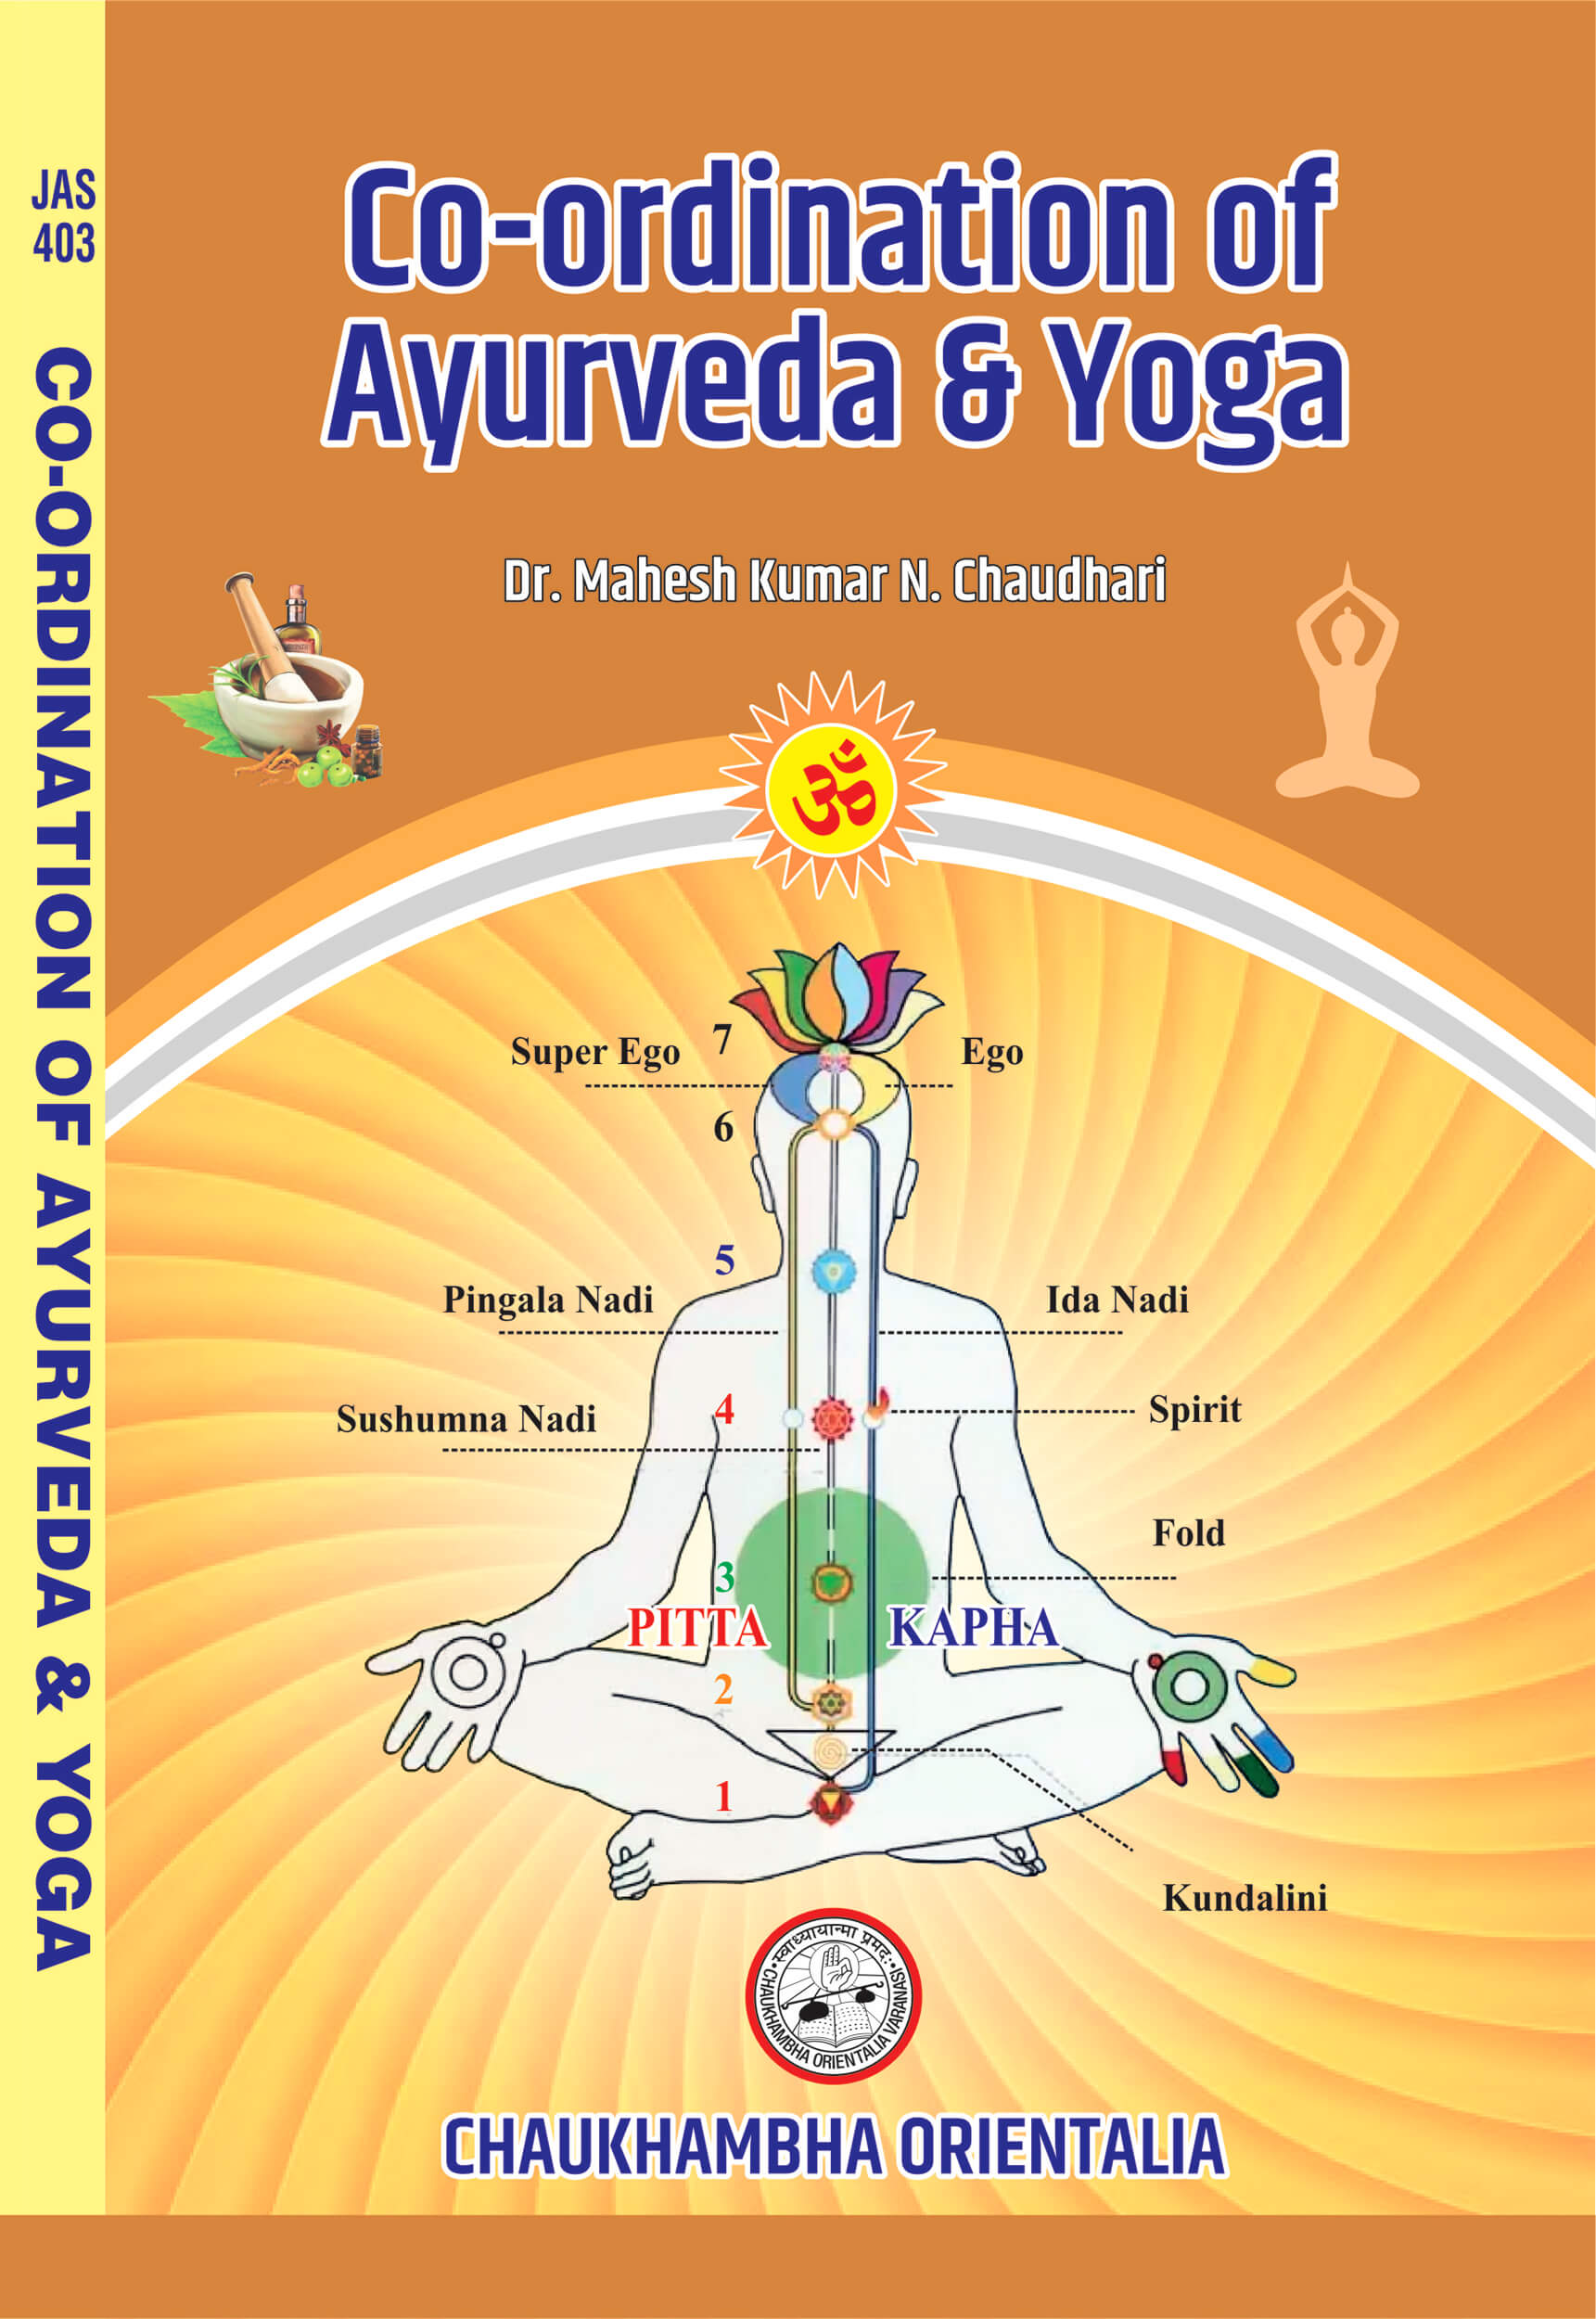 Chaukhambha Orientalia Co-ordination of Ayurveda & Yoga